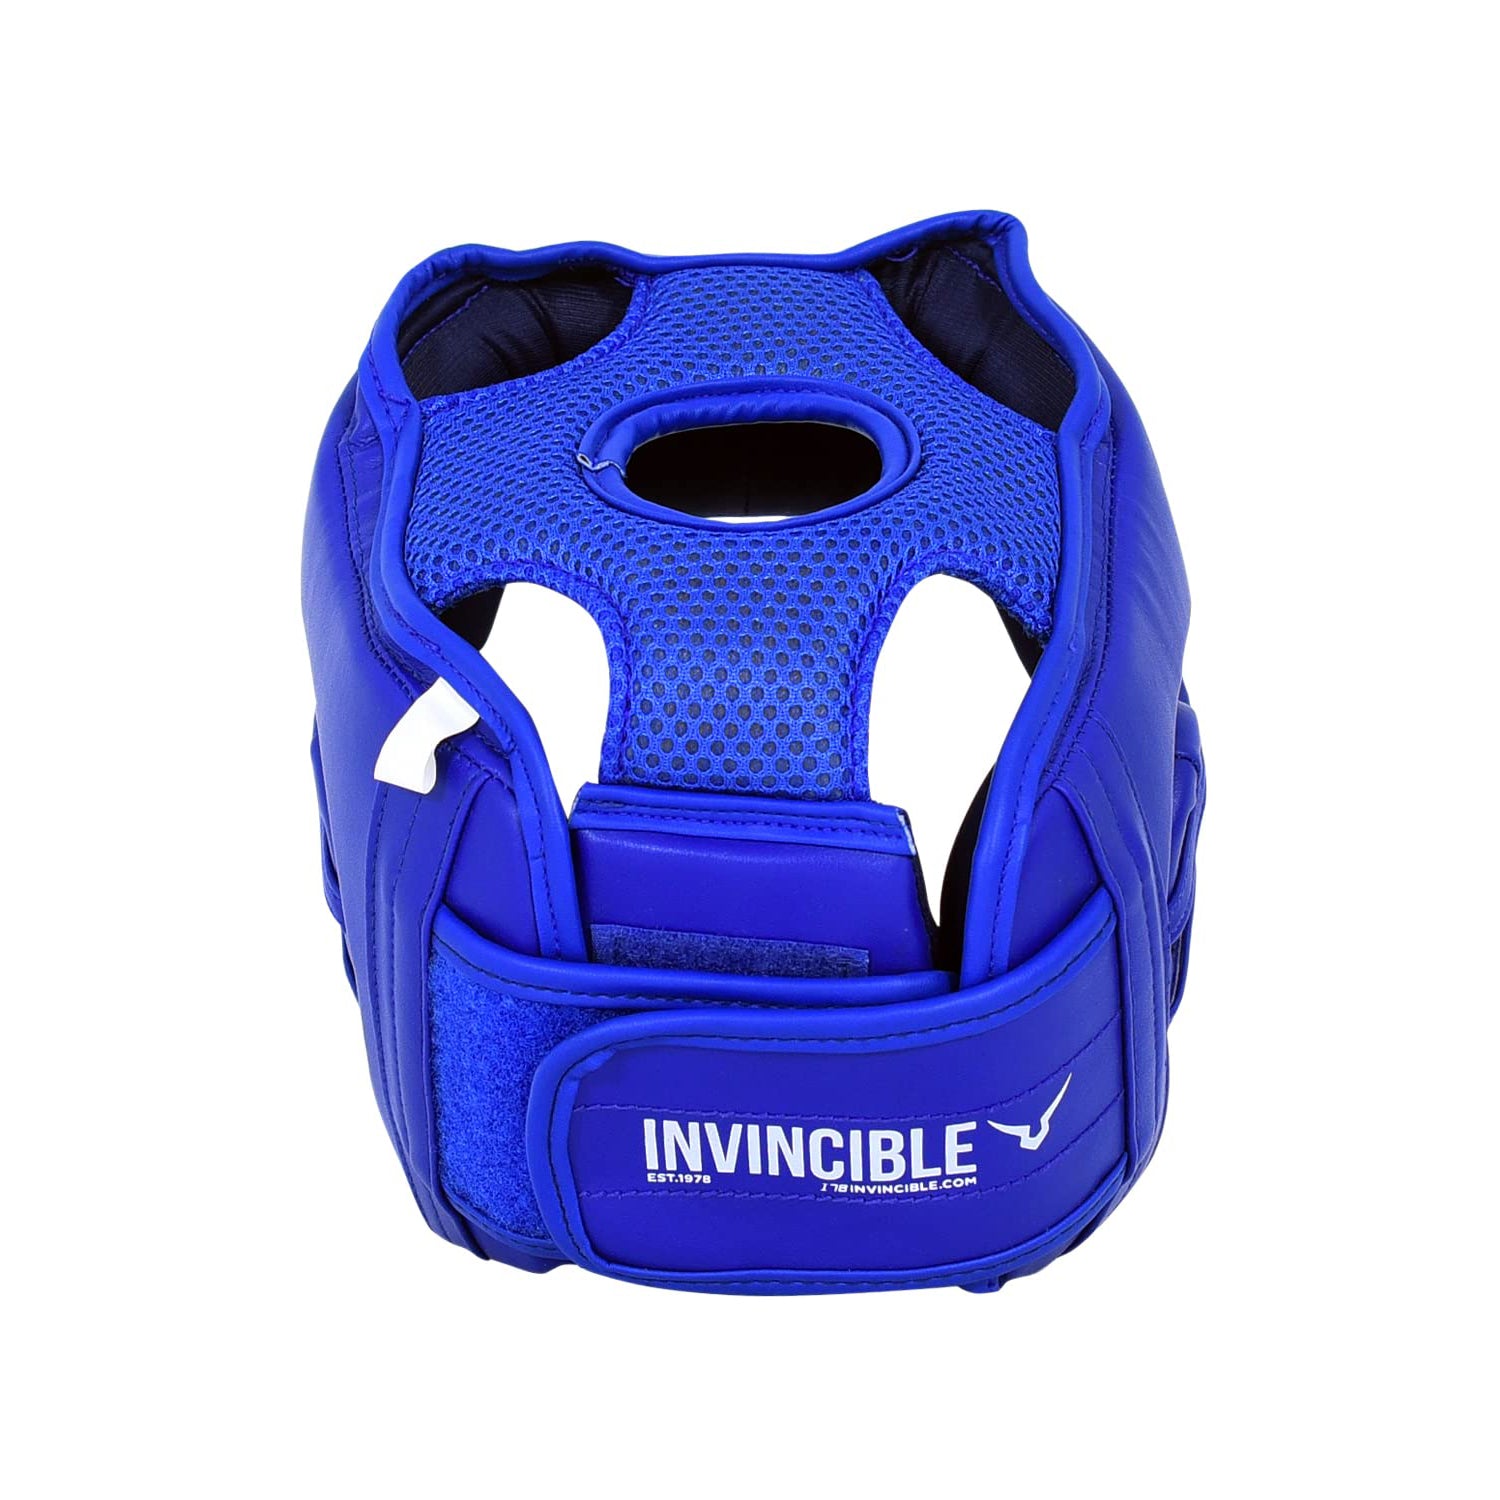 Invincible Competition Head Guard - Best Price online Prokicksports.com